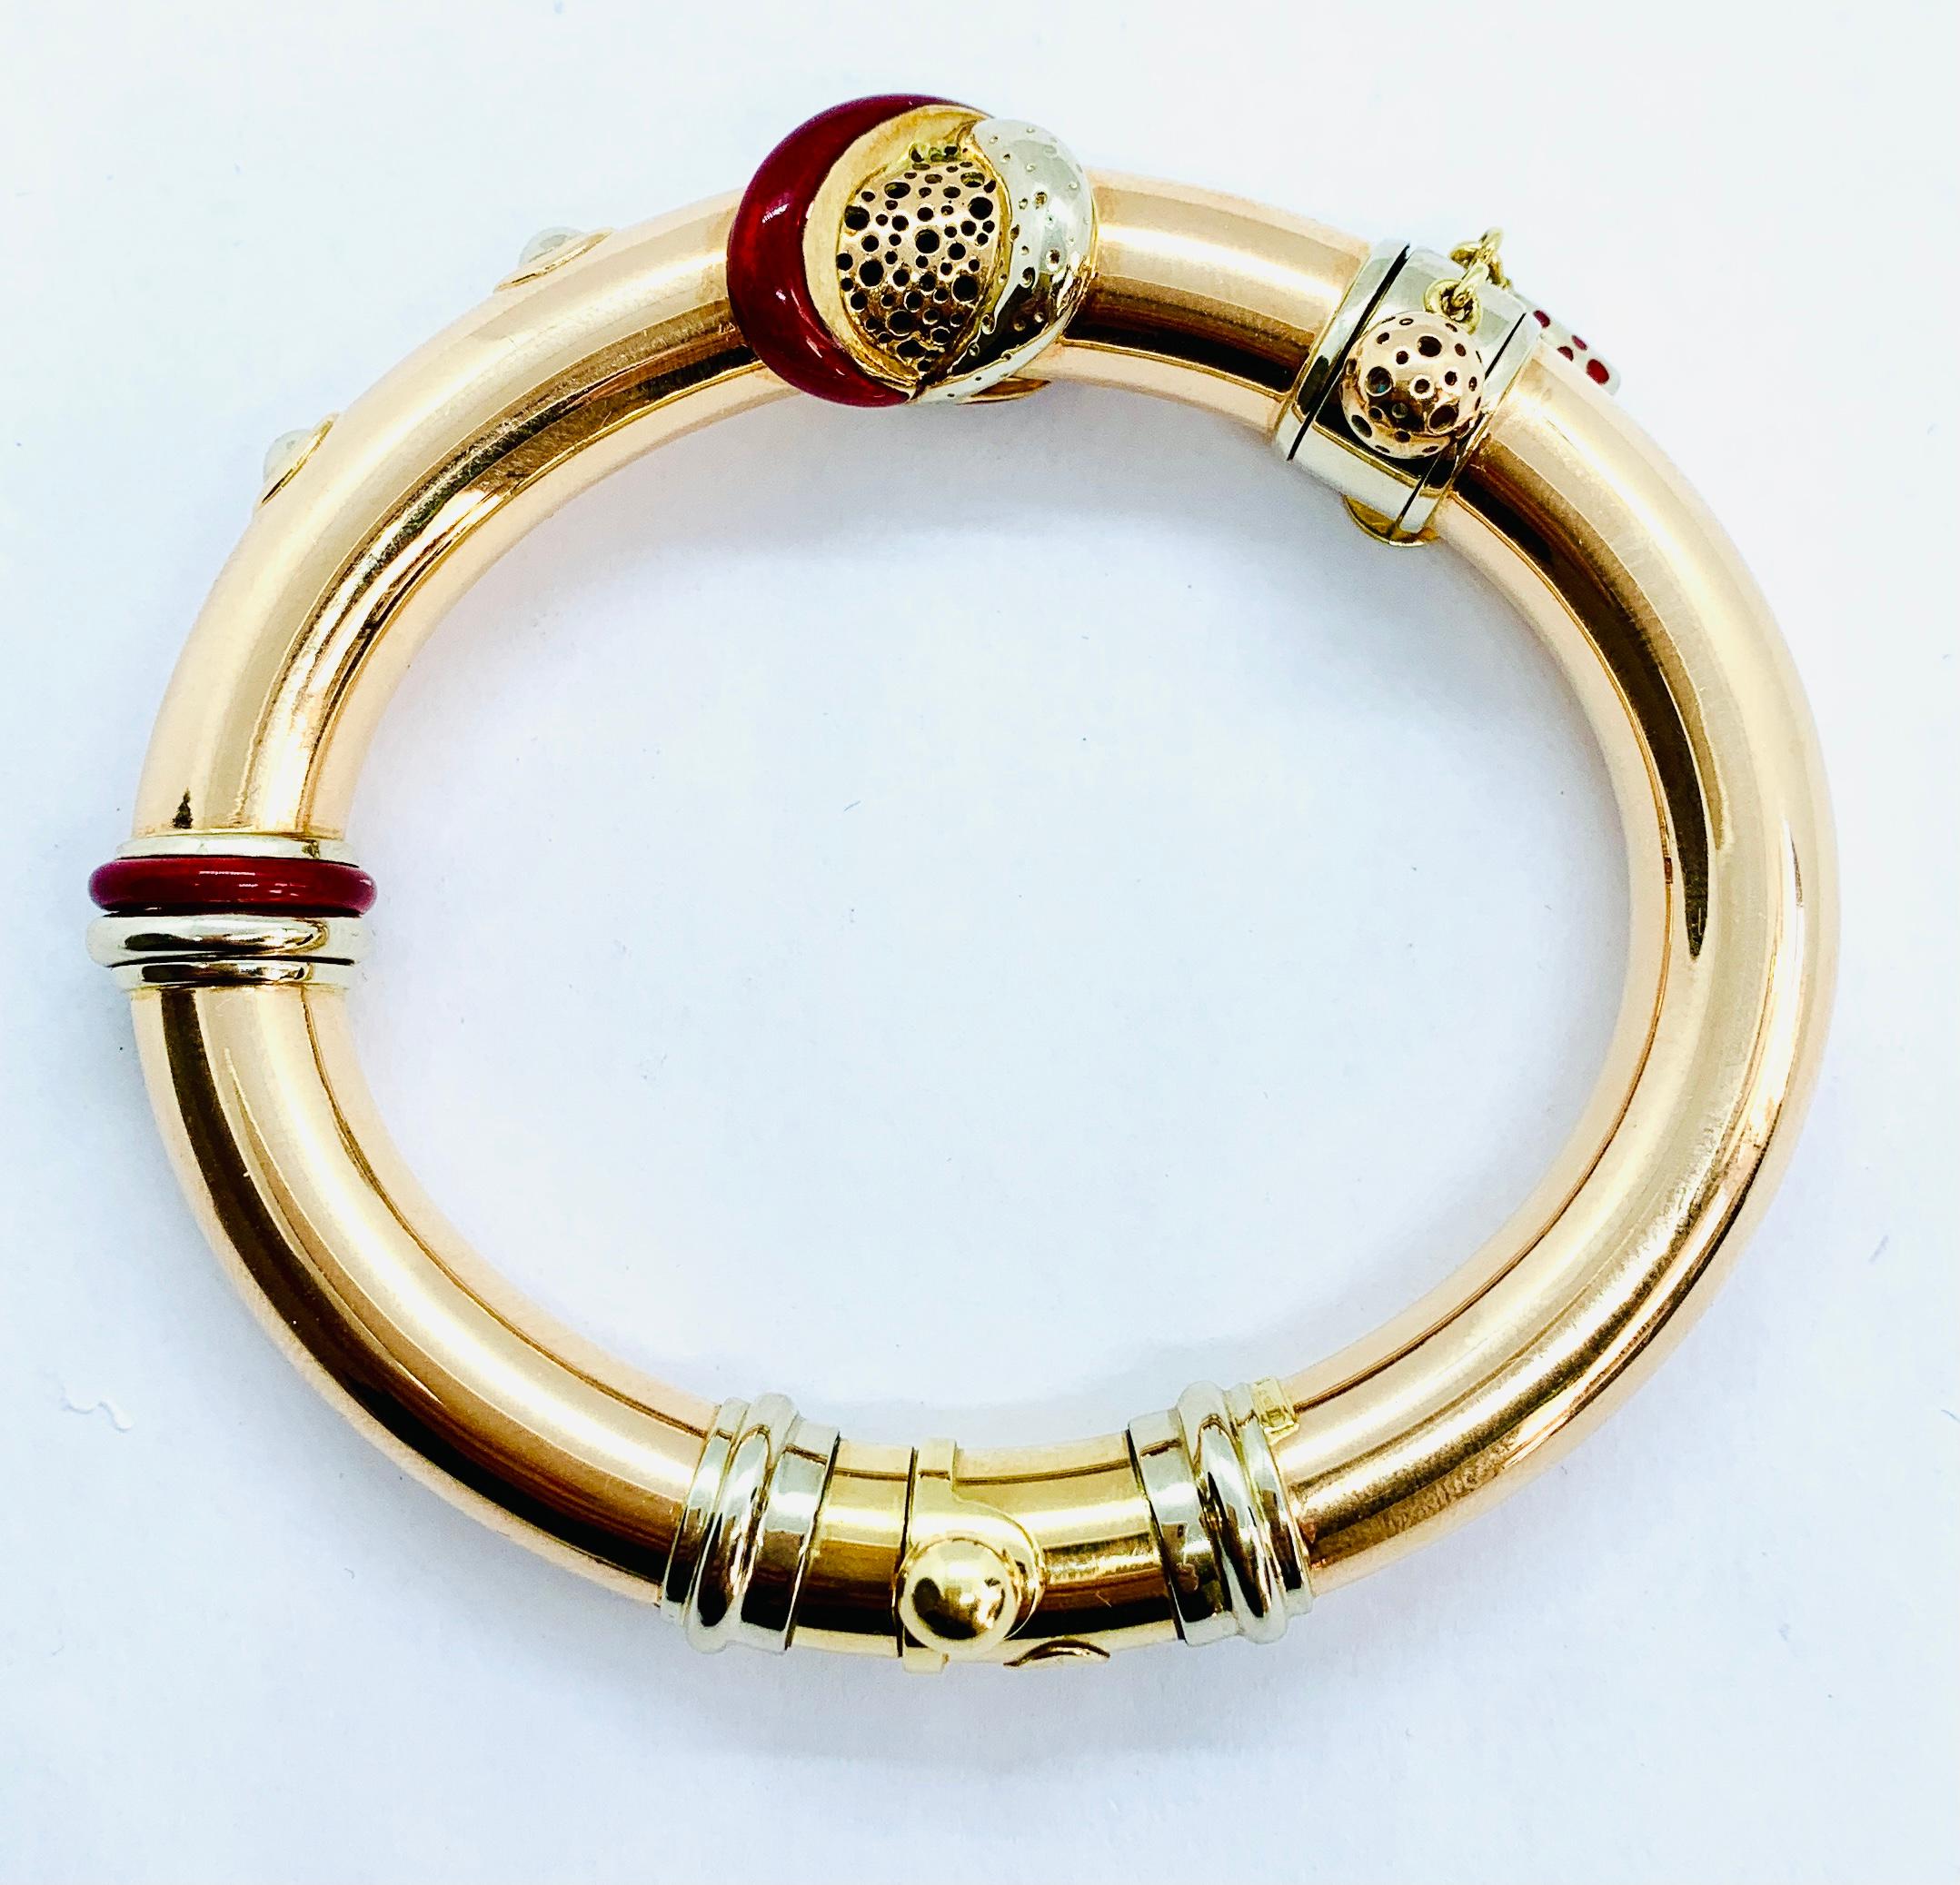 Modern La Nouvelle Bague 18 Karat Yellow Gold and Red Enamel Bangle Bracelet